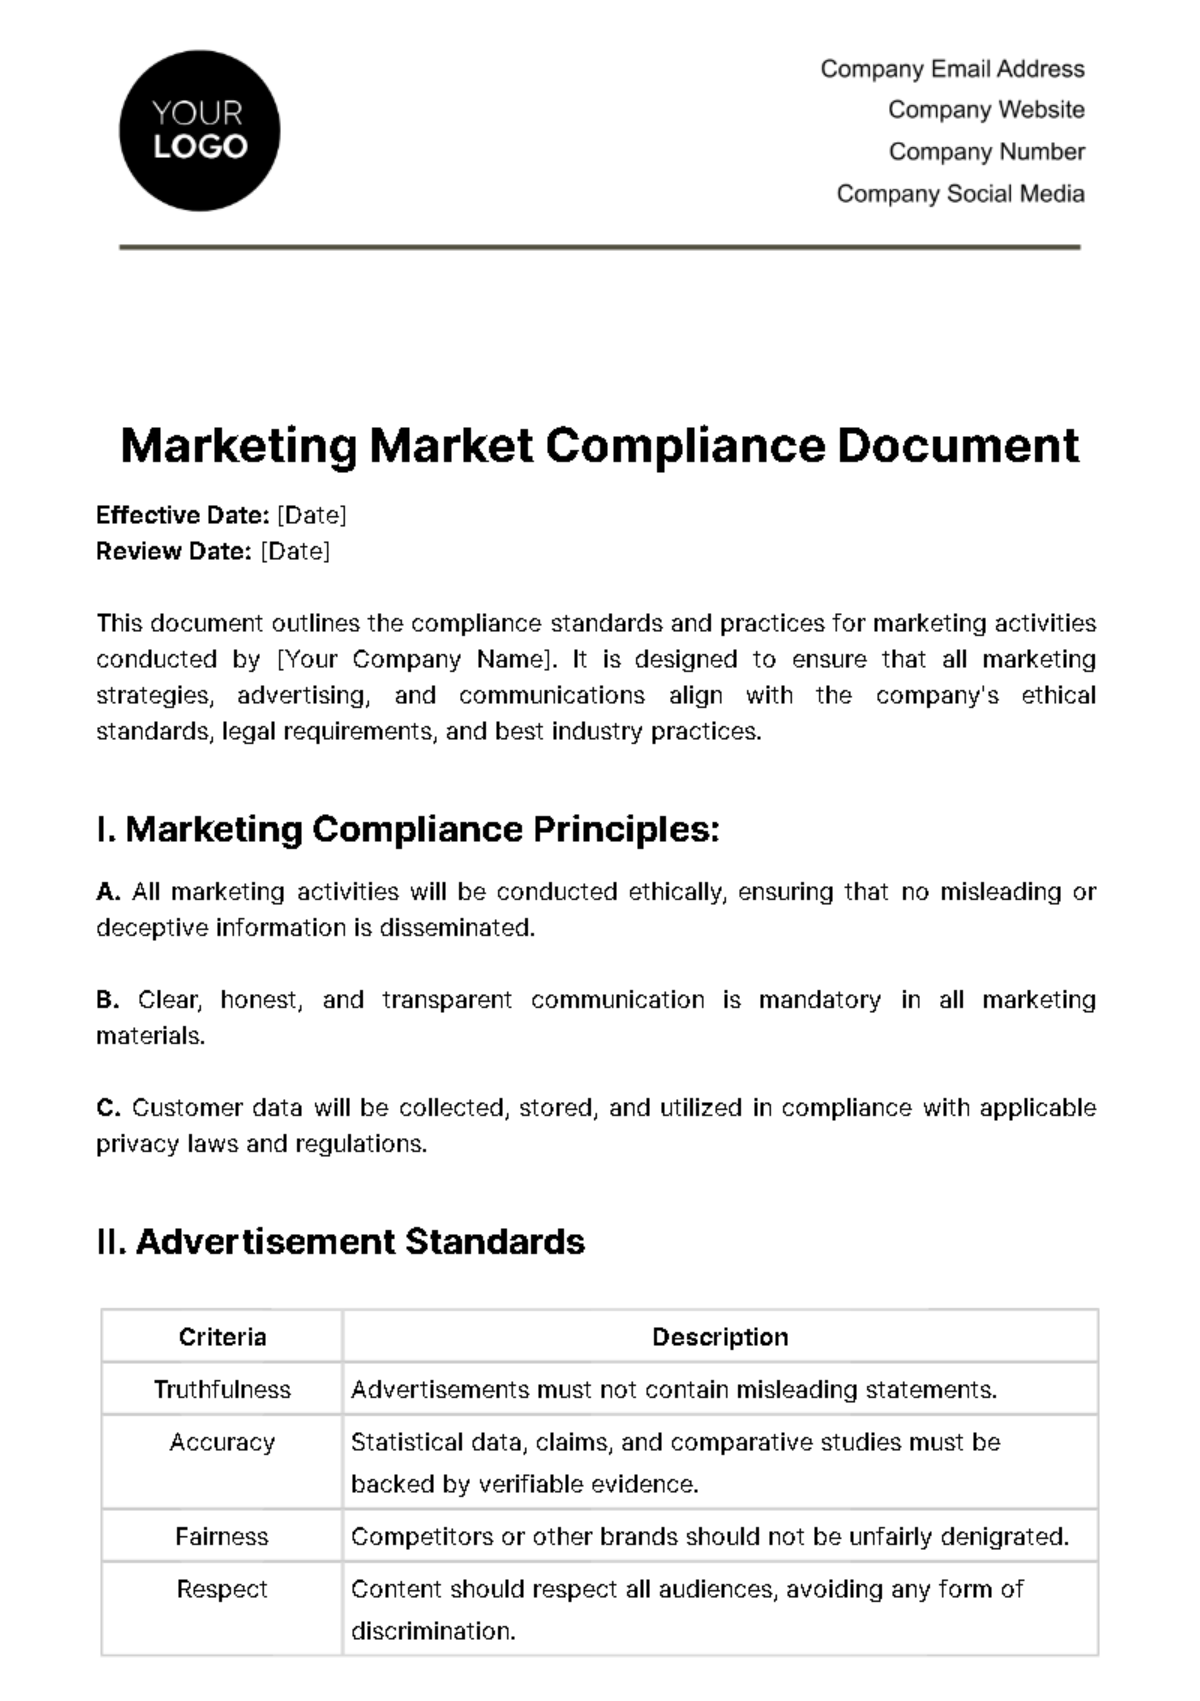 Free Marketing Market Compliance Document Template